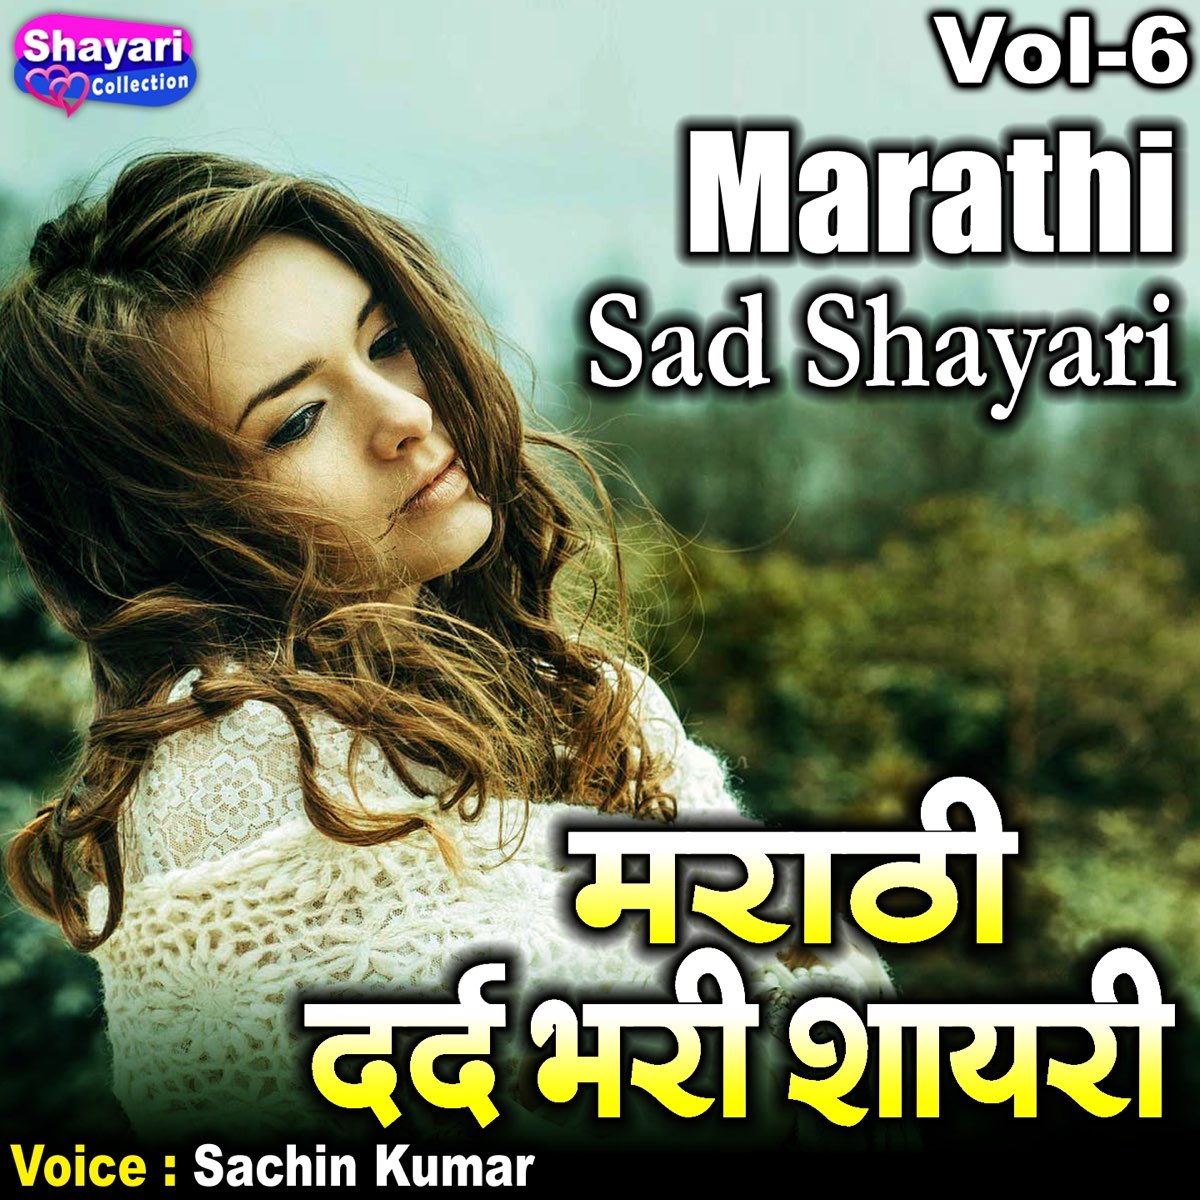 Marathi Sad Shayari, Vol. 6 - Single by Sachin Kumar on Apple Music